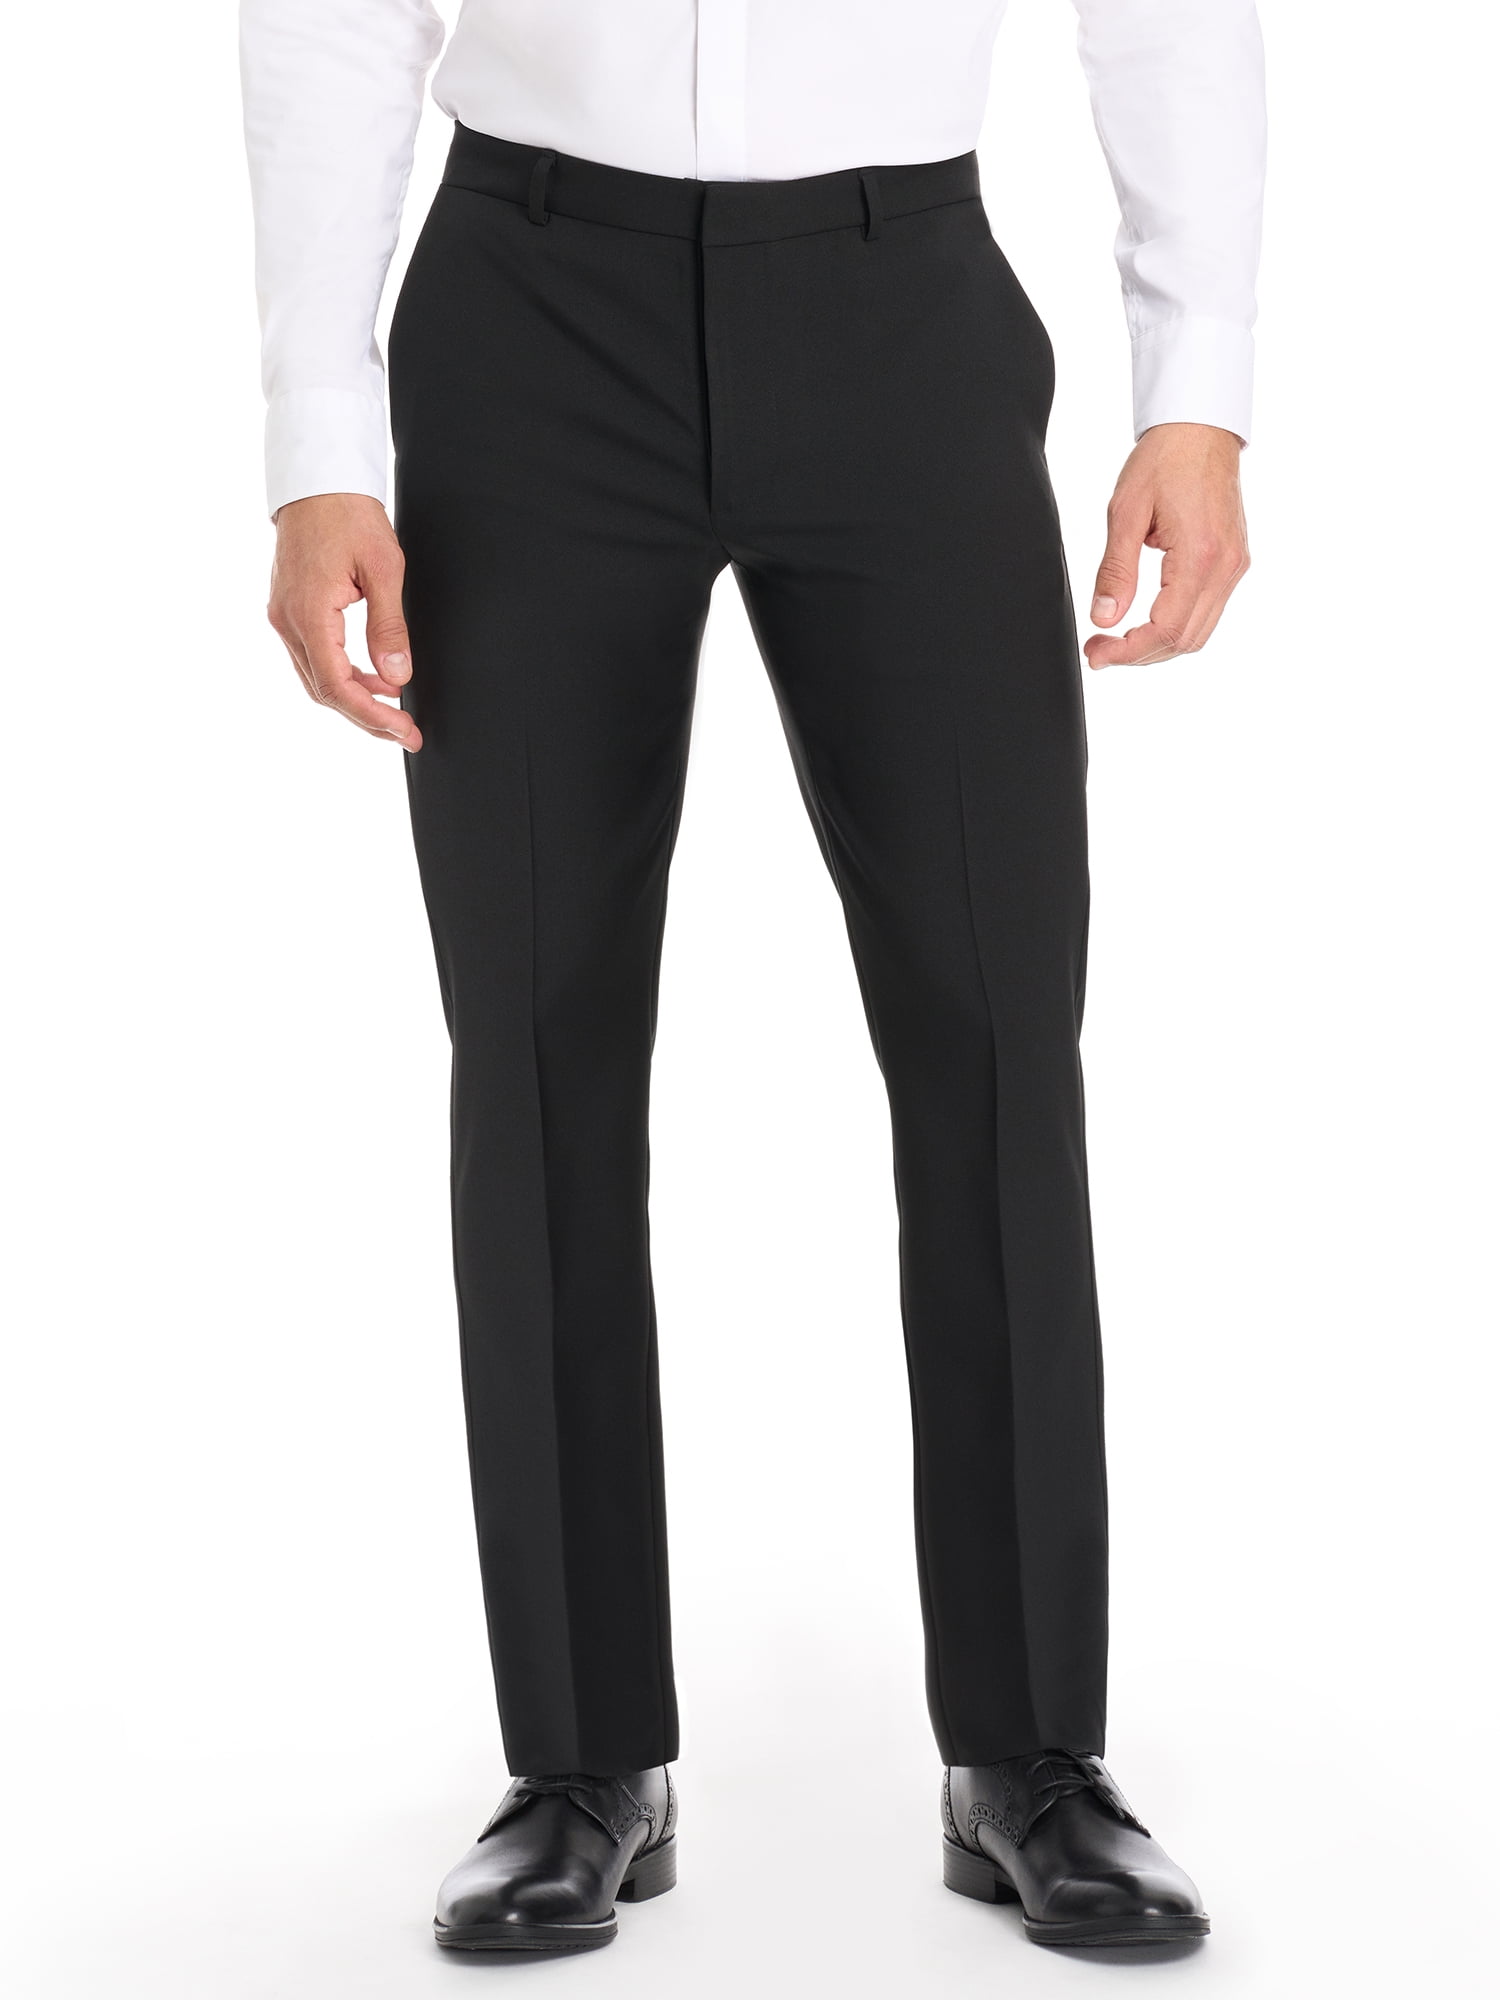 Buy Arrow Autoflex Super Crease Formal Trousers Black at Amazonin